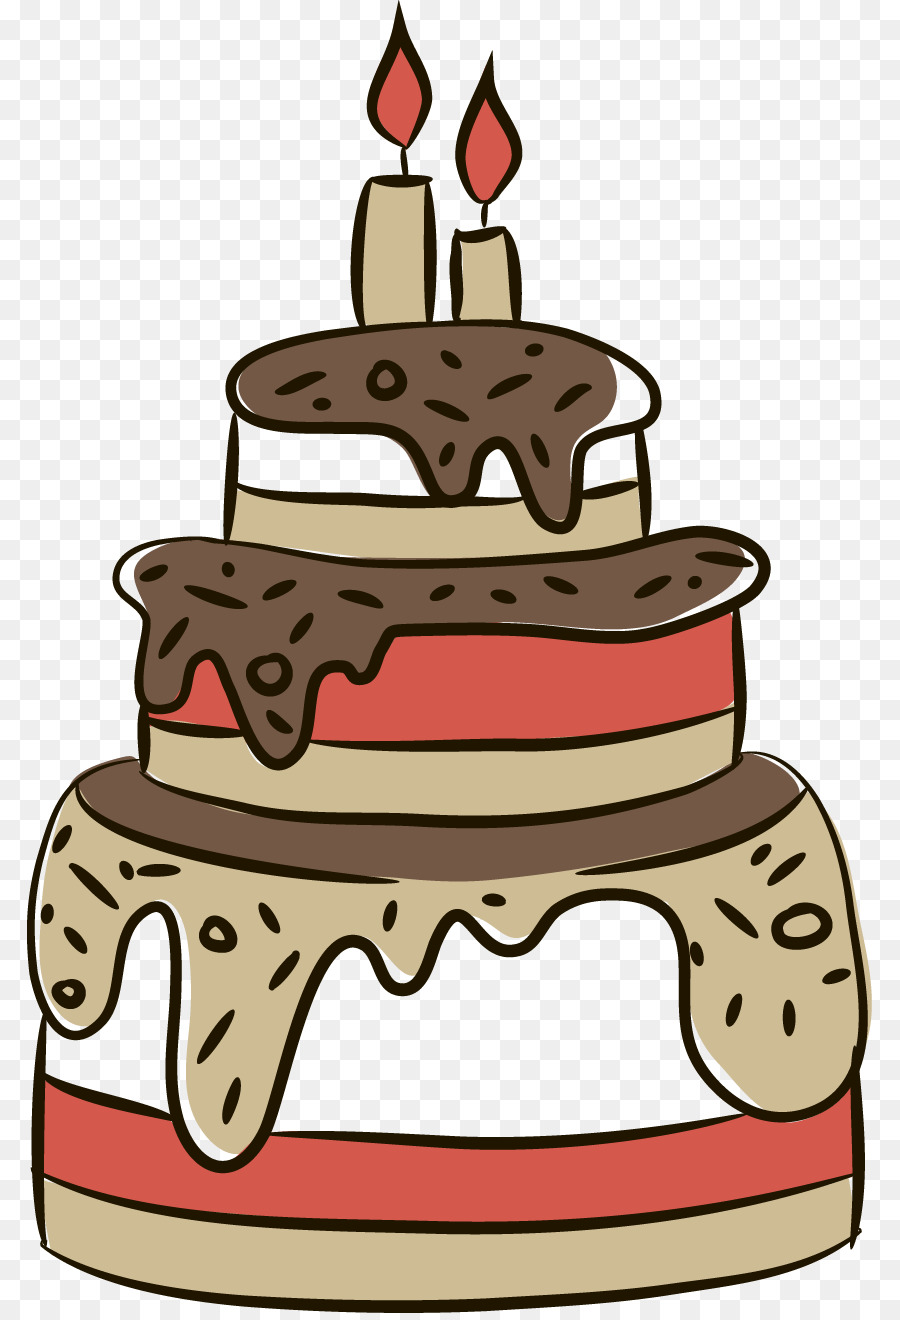 Birthday cake Clip art - Vector flat cake png download - 845*1313 - Free Transparent Birthday Cake png Download.